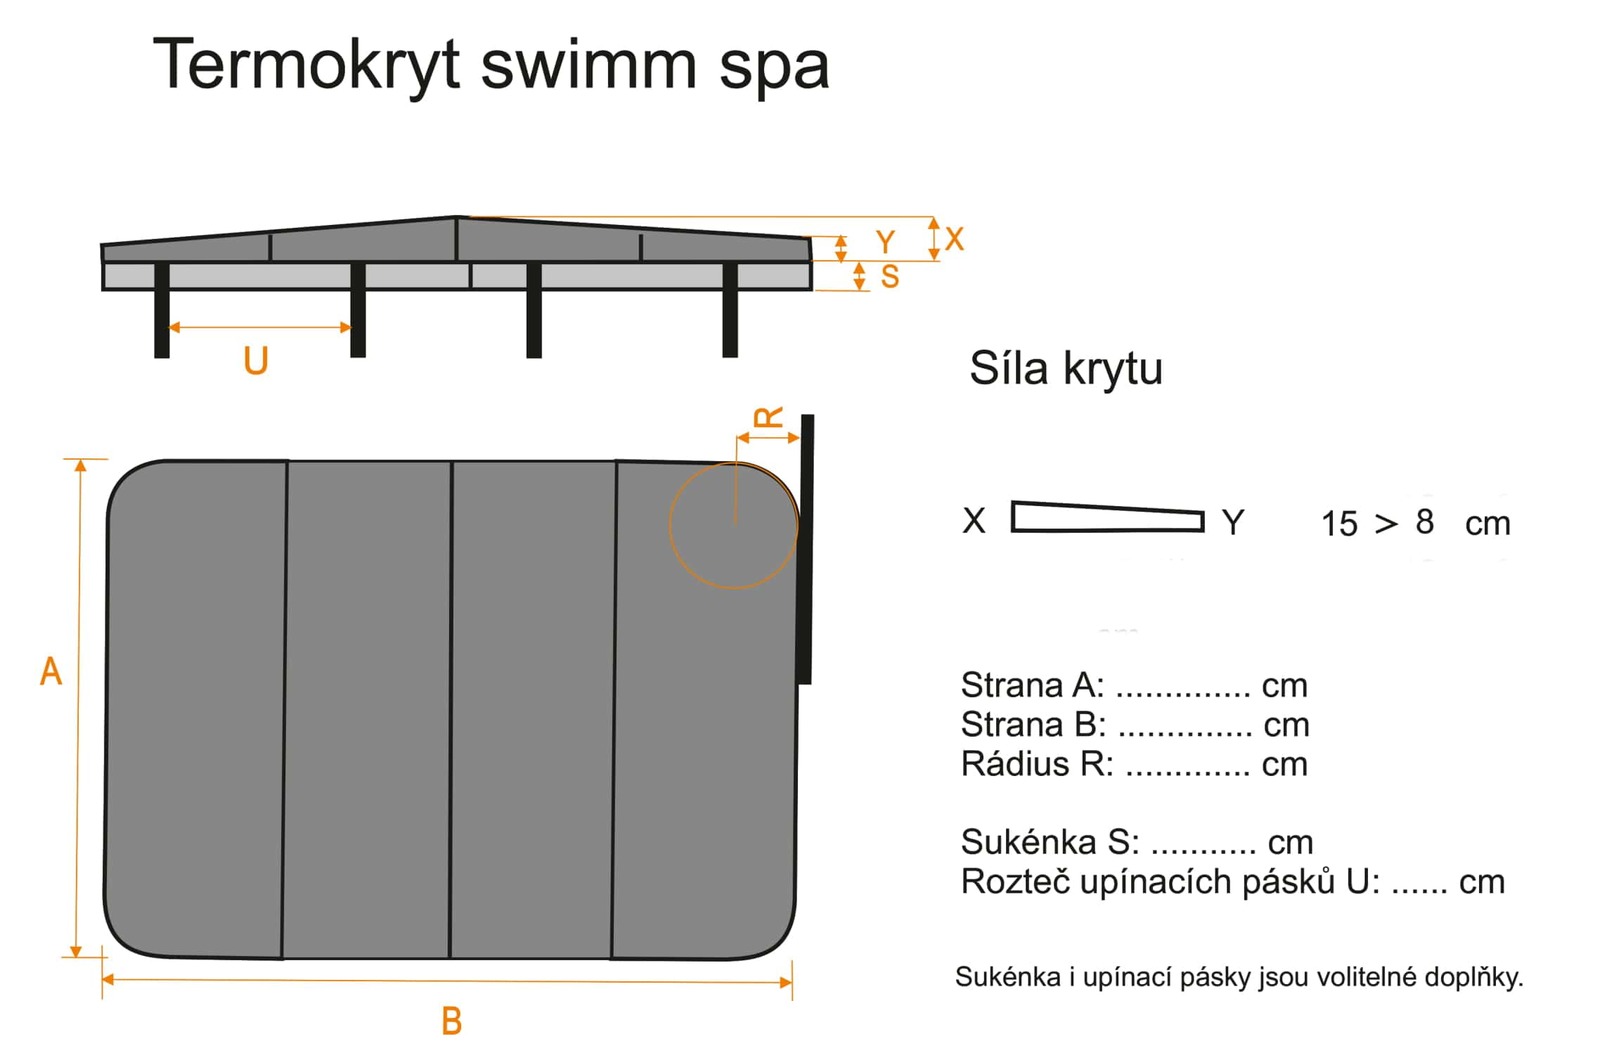 Couverture isothermique swimm spa